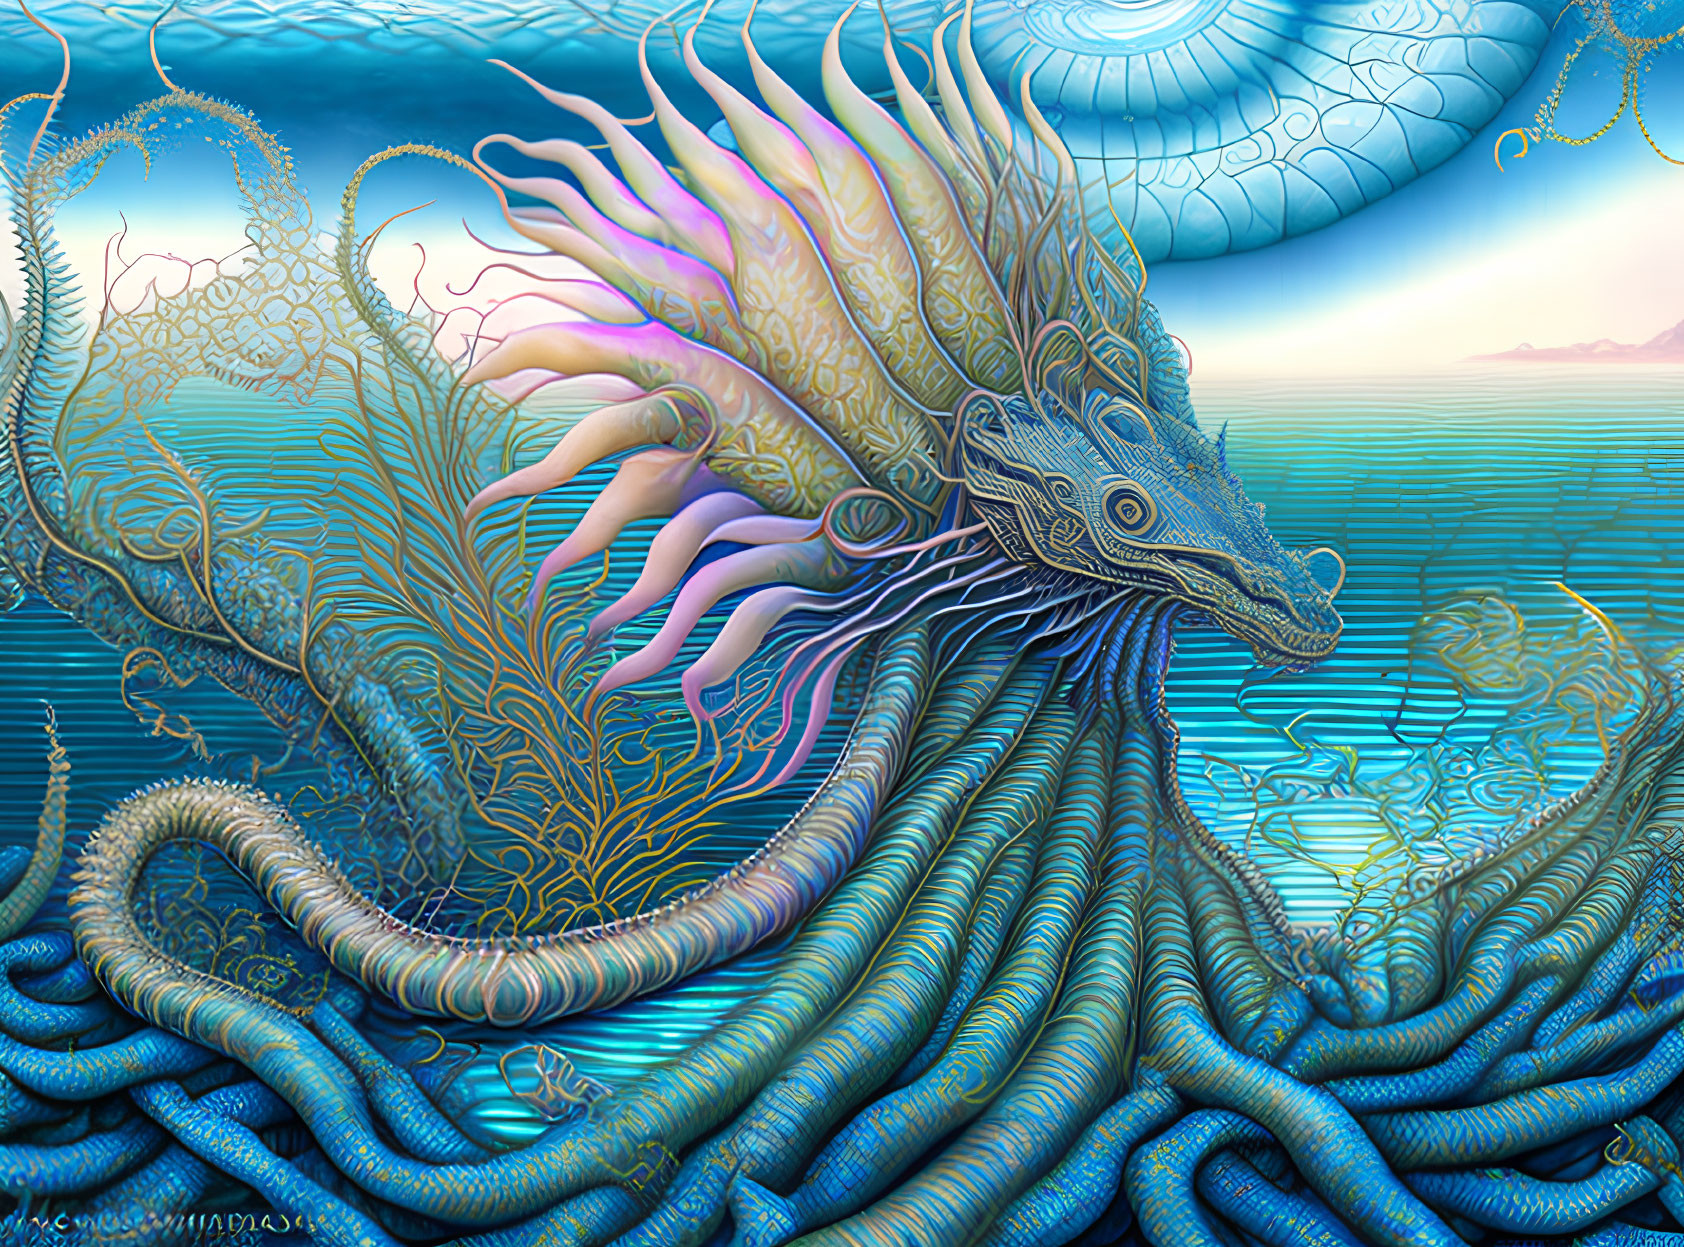 Colorful Mythological Sea Dragon Illustration in Oceanic Setting